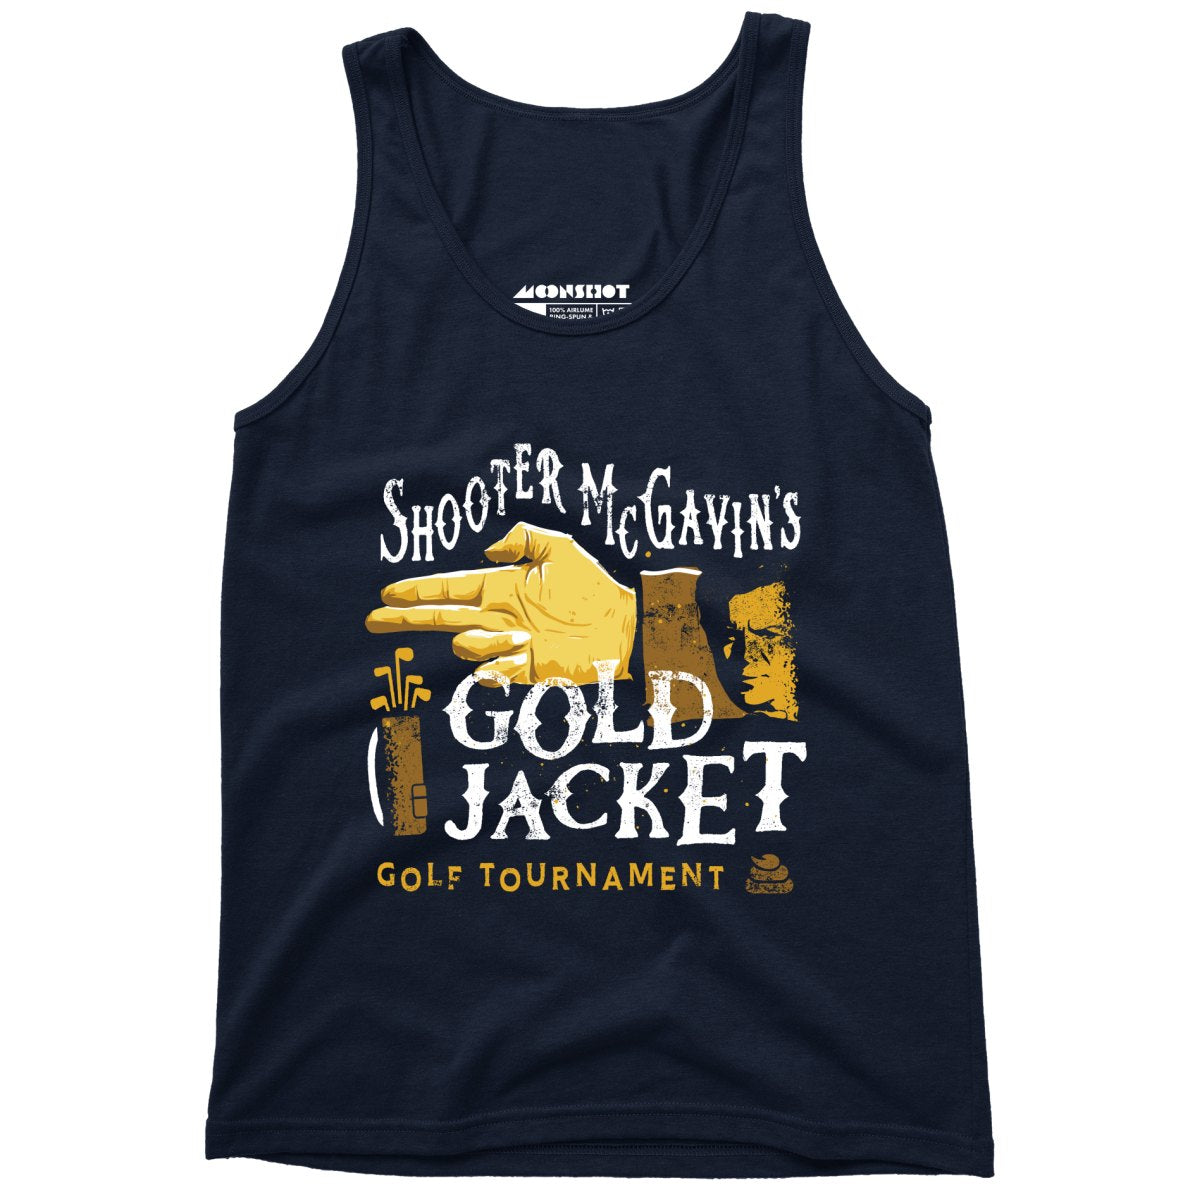 Shooter McGavin's Gold Jacket Golf Tournament - Unisex Tank Top